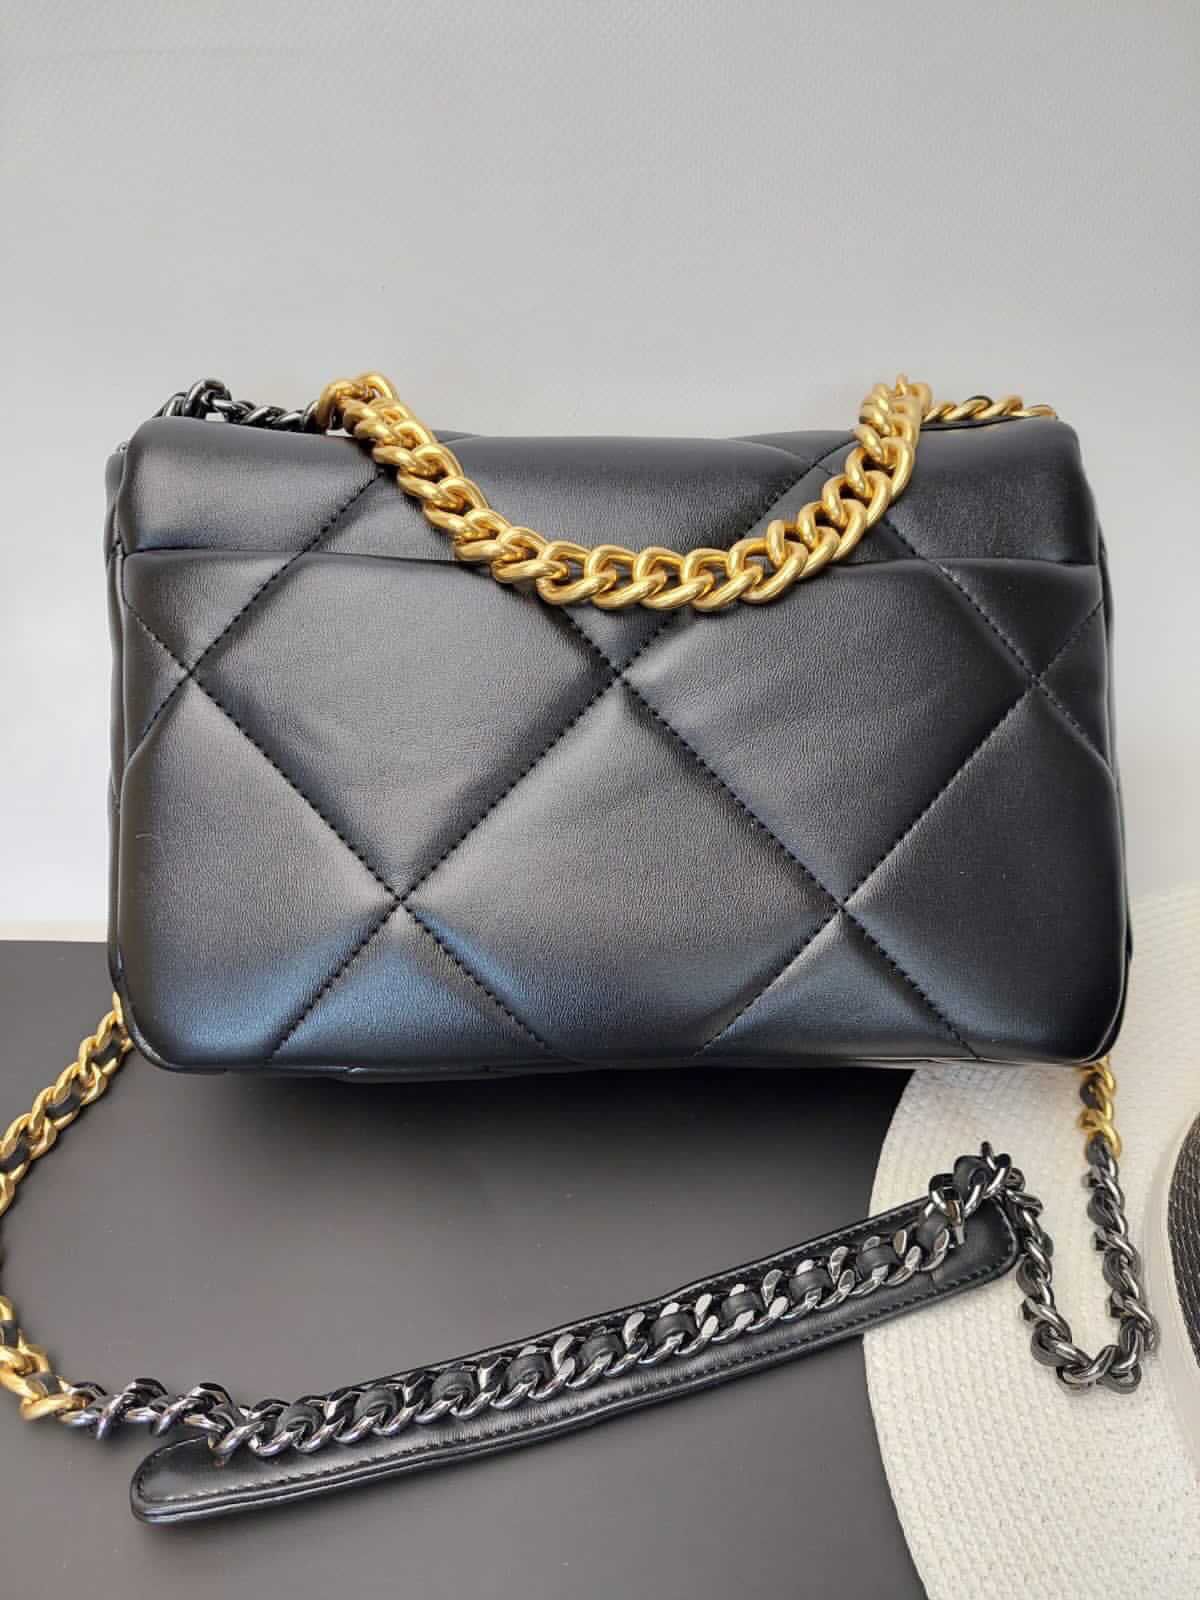 New Chanel Black Shoulder Bag, Includes Chanel Box,  VIP GIFT